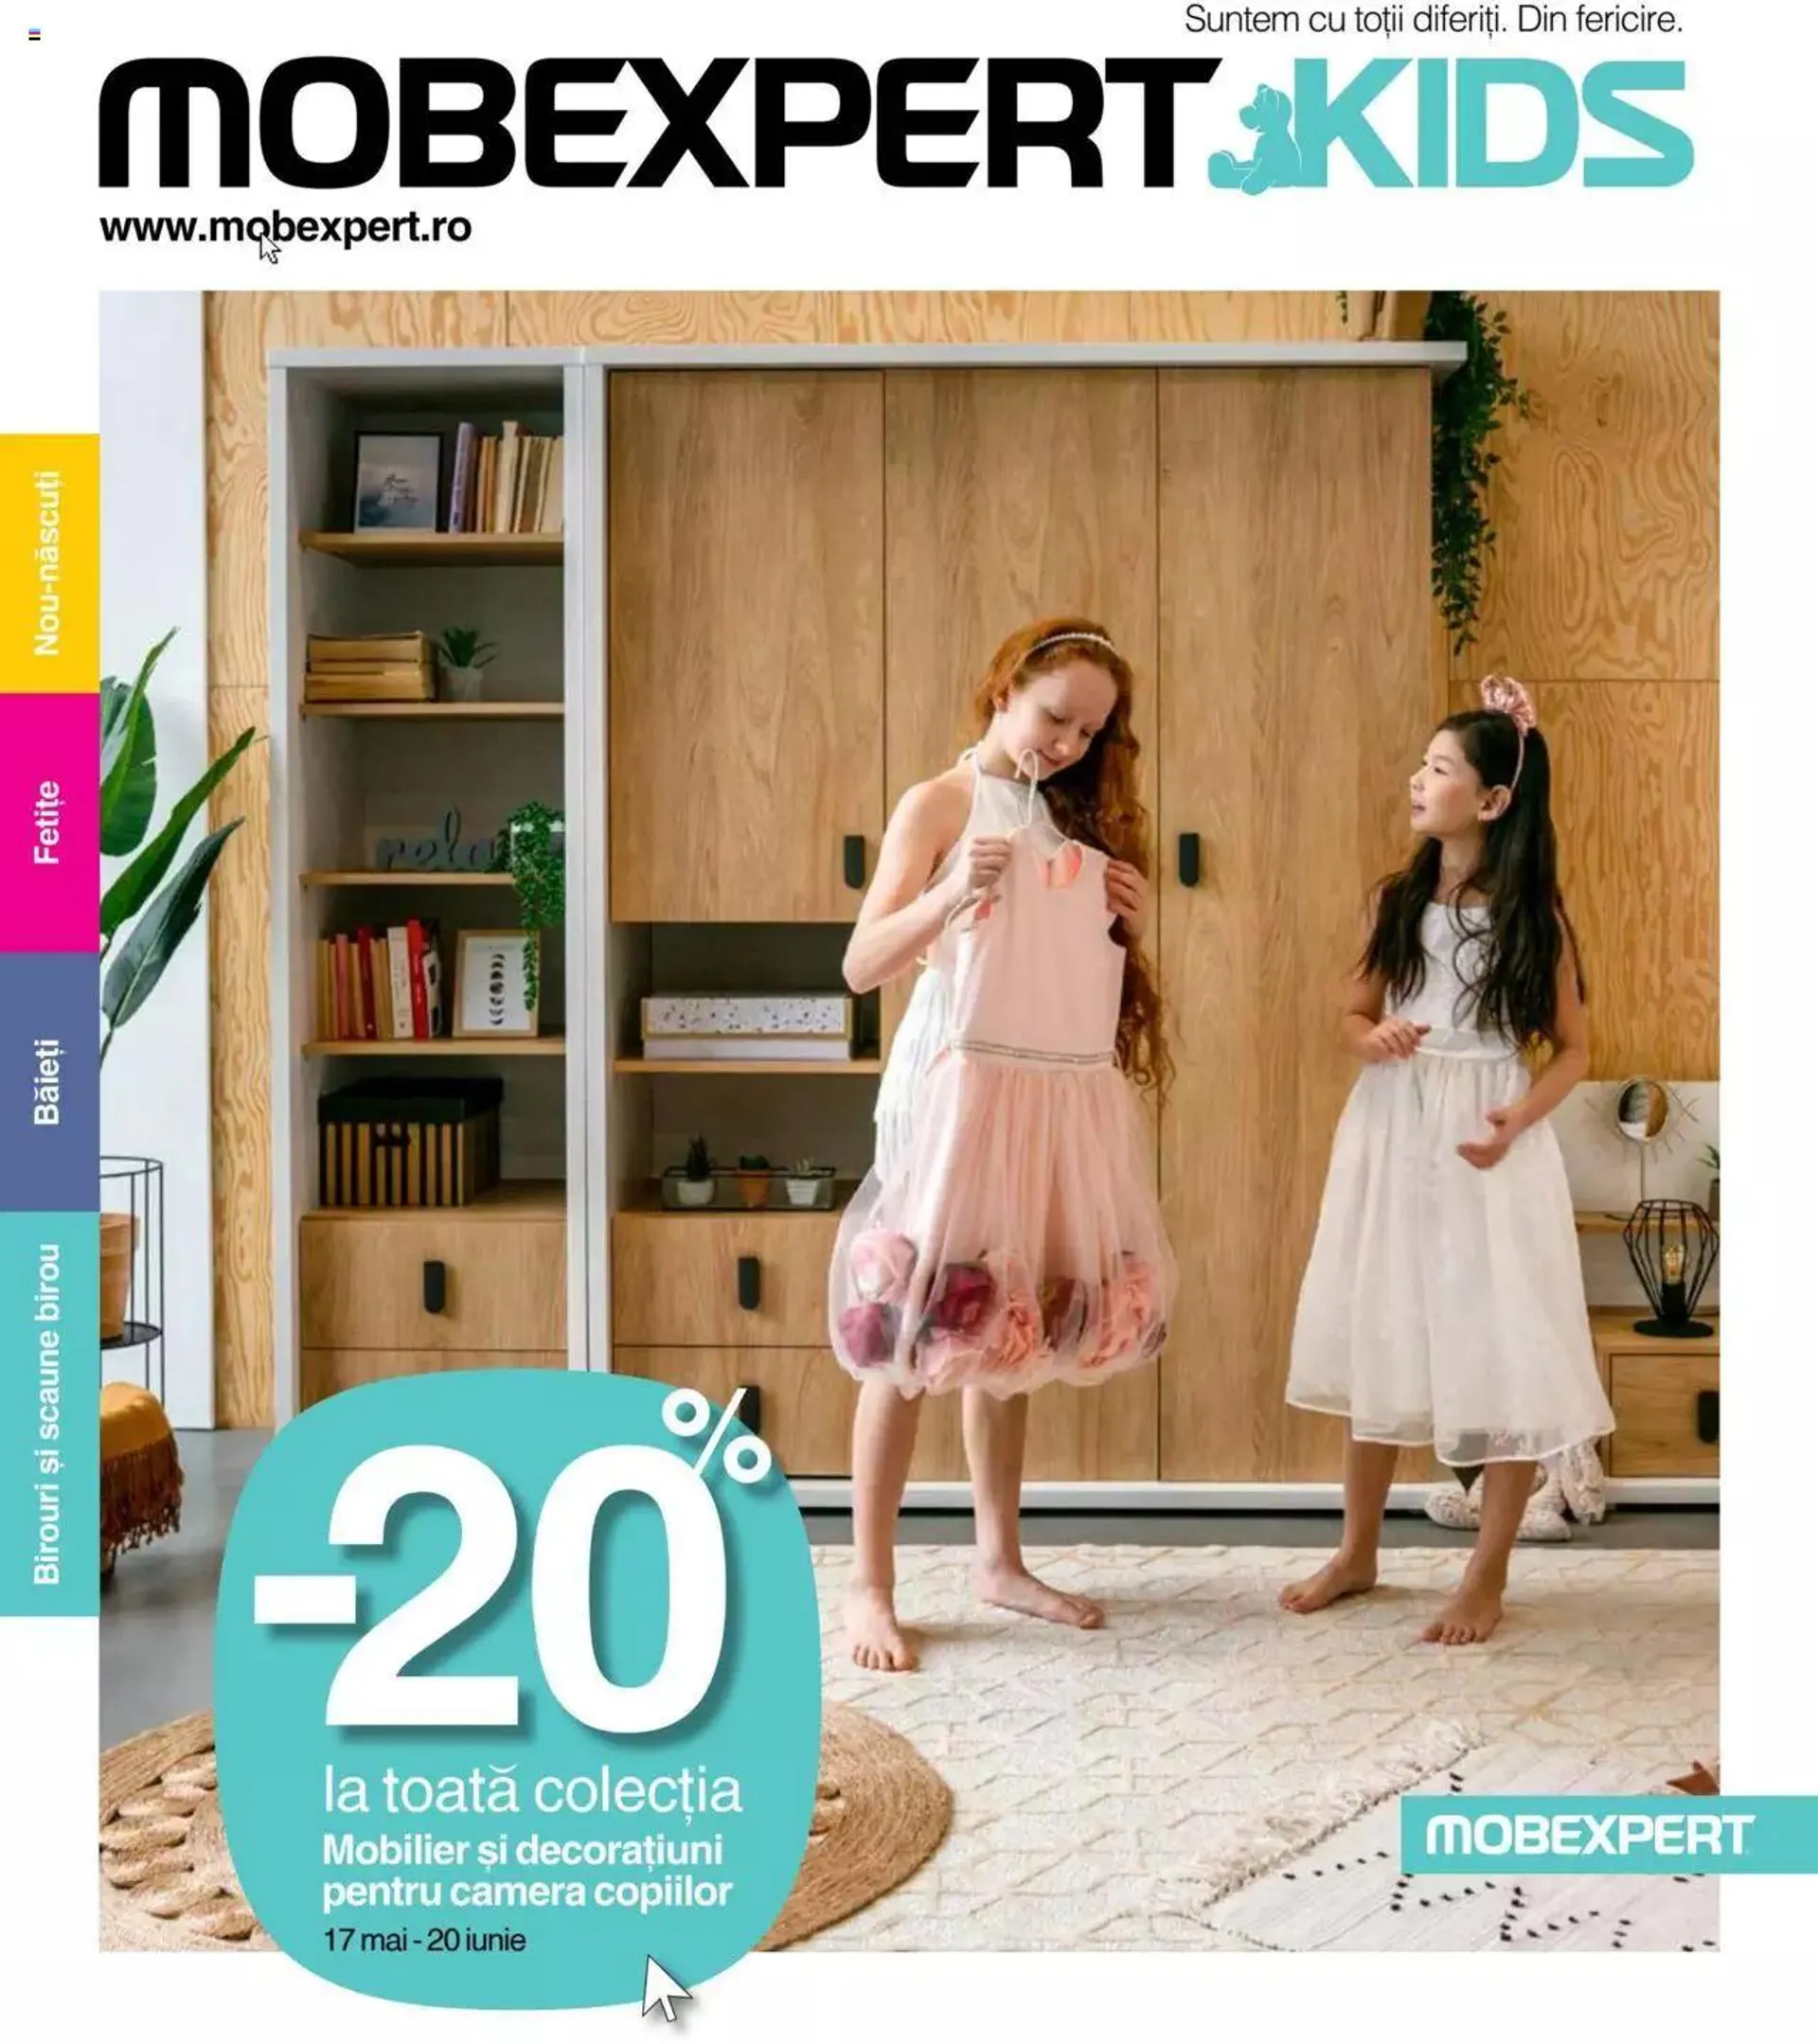 Mobexpert catalog - Kids - 0